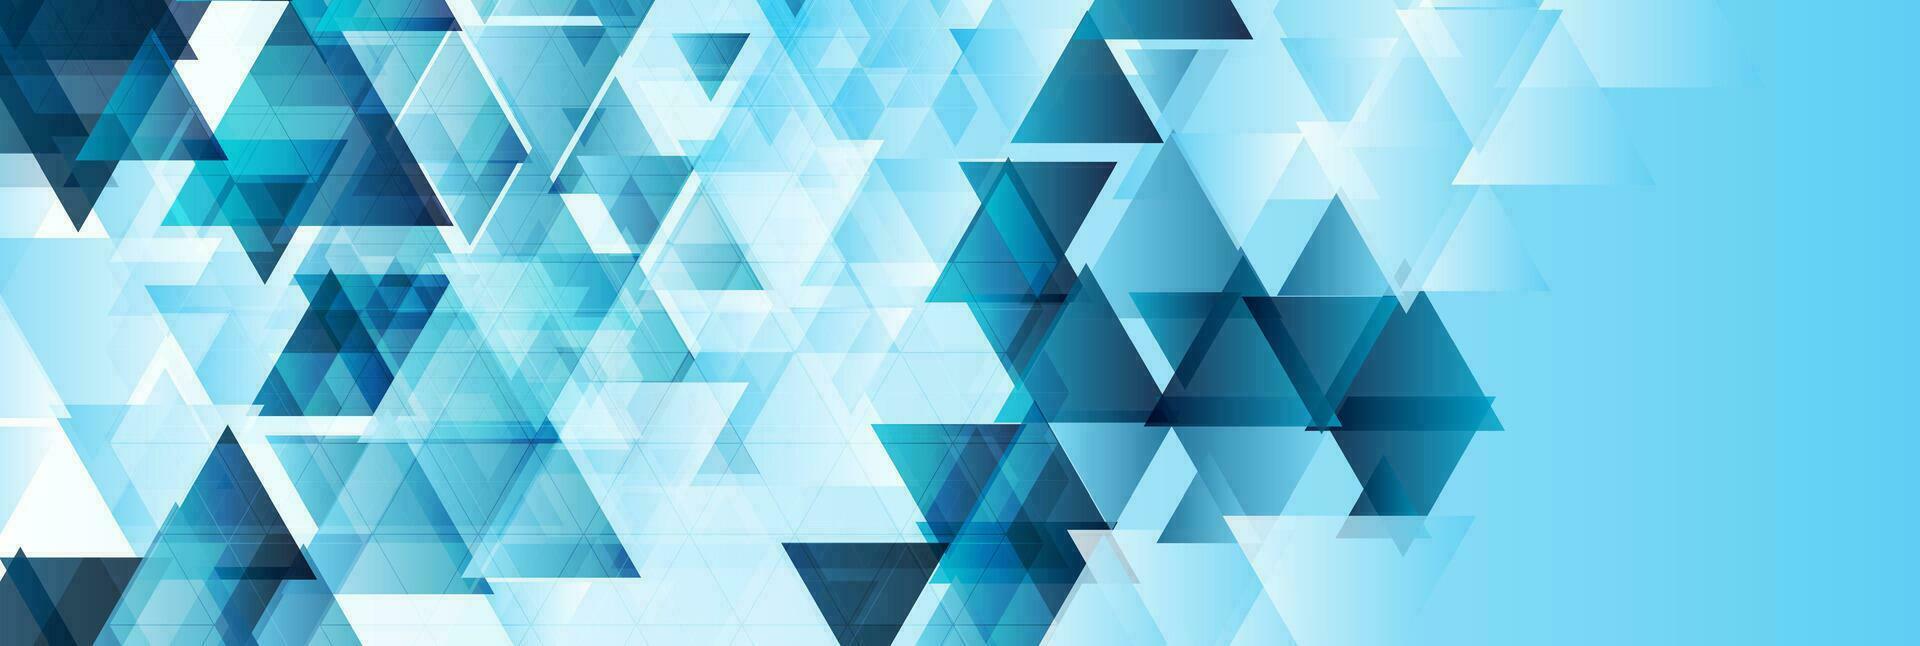 azul lustroso triângulos abstrato tecnologia fundo vetor